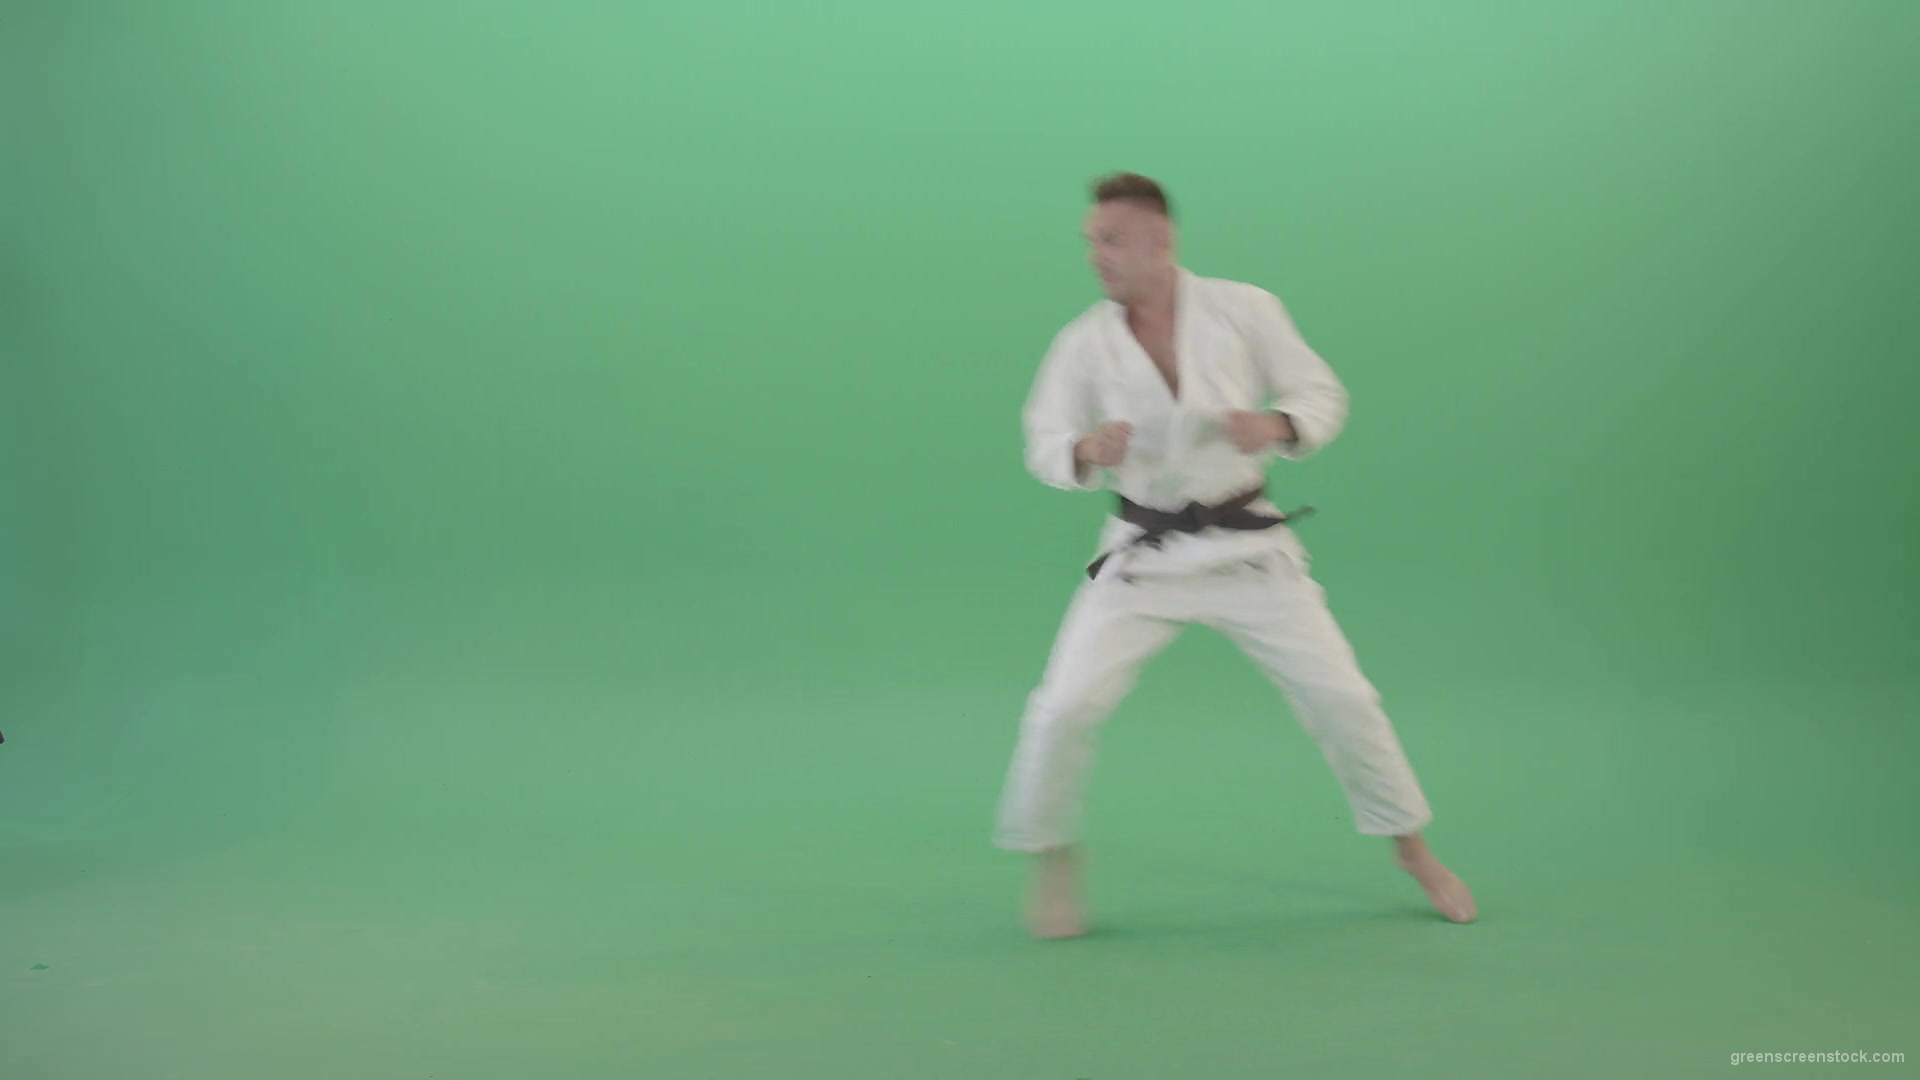 vj video background Mortal-Kombat-by-Karate-Ju-Jutsu-trainer-sportsman-isolated-on-green-screen-4K-Video-Footage-1920_003